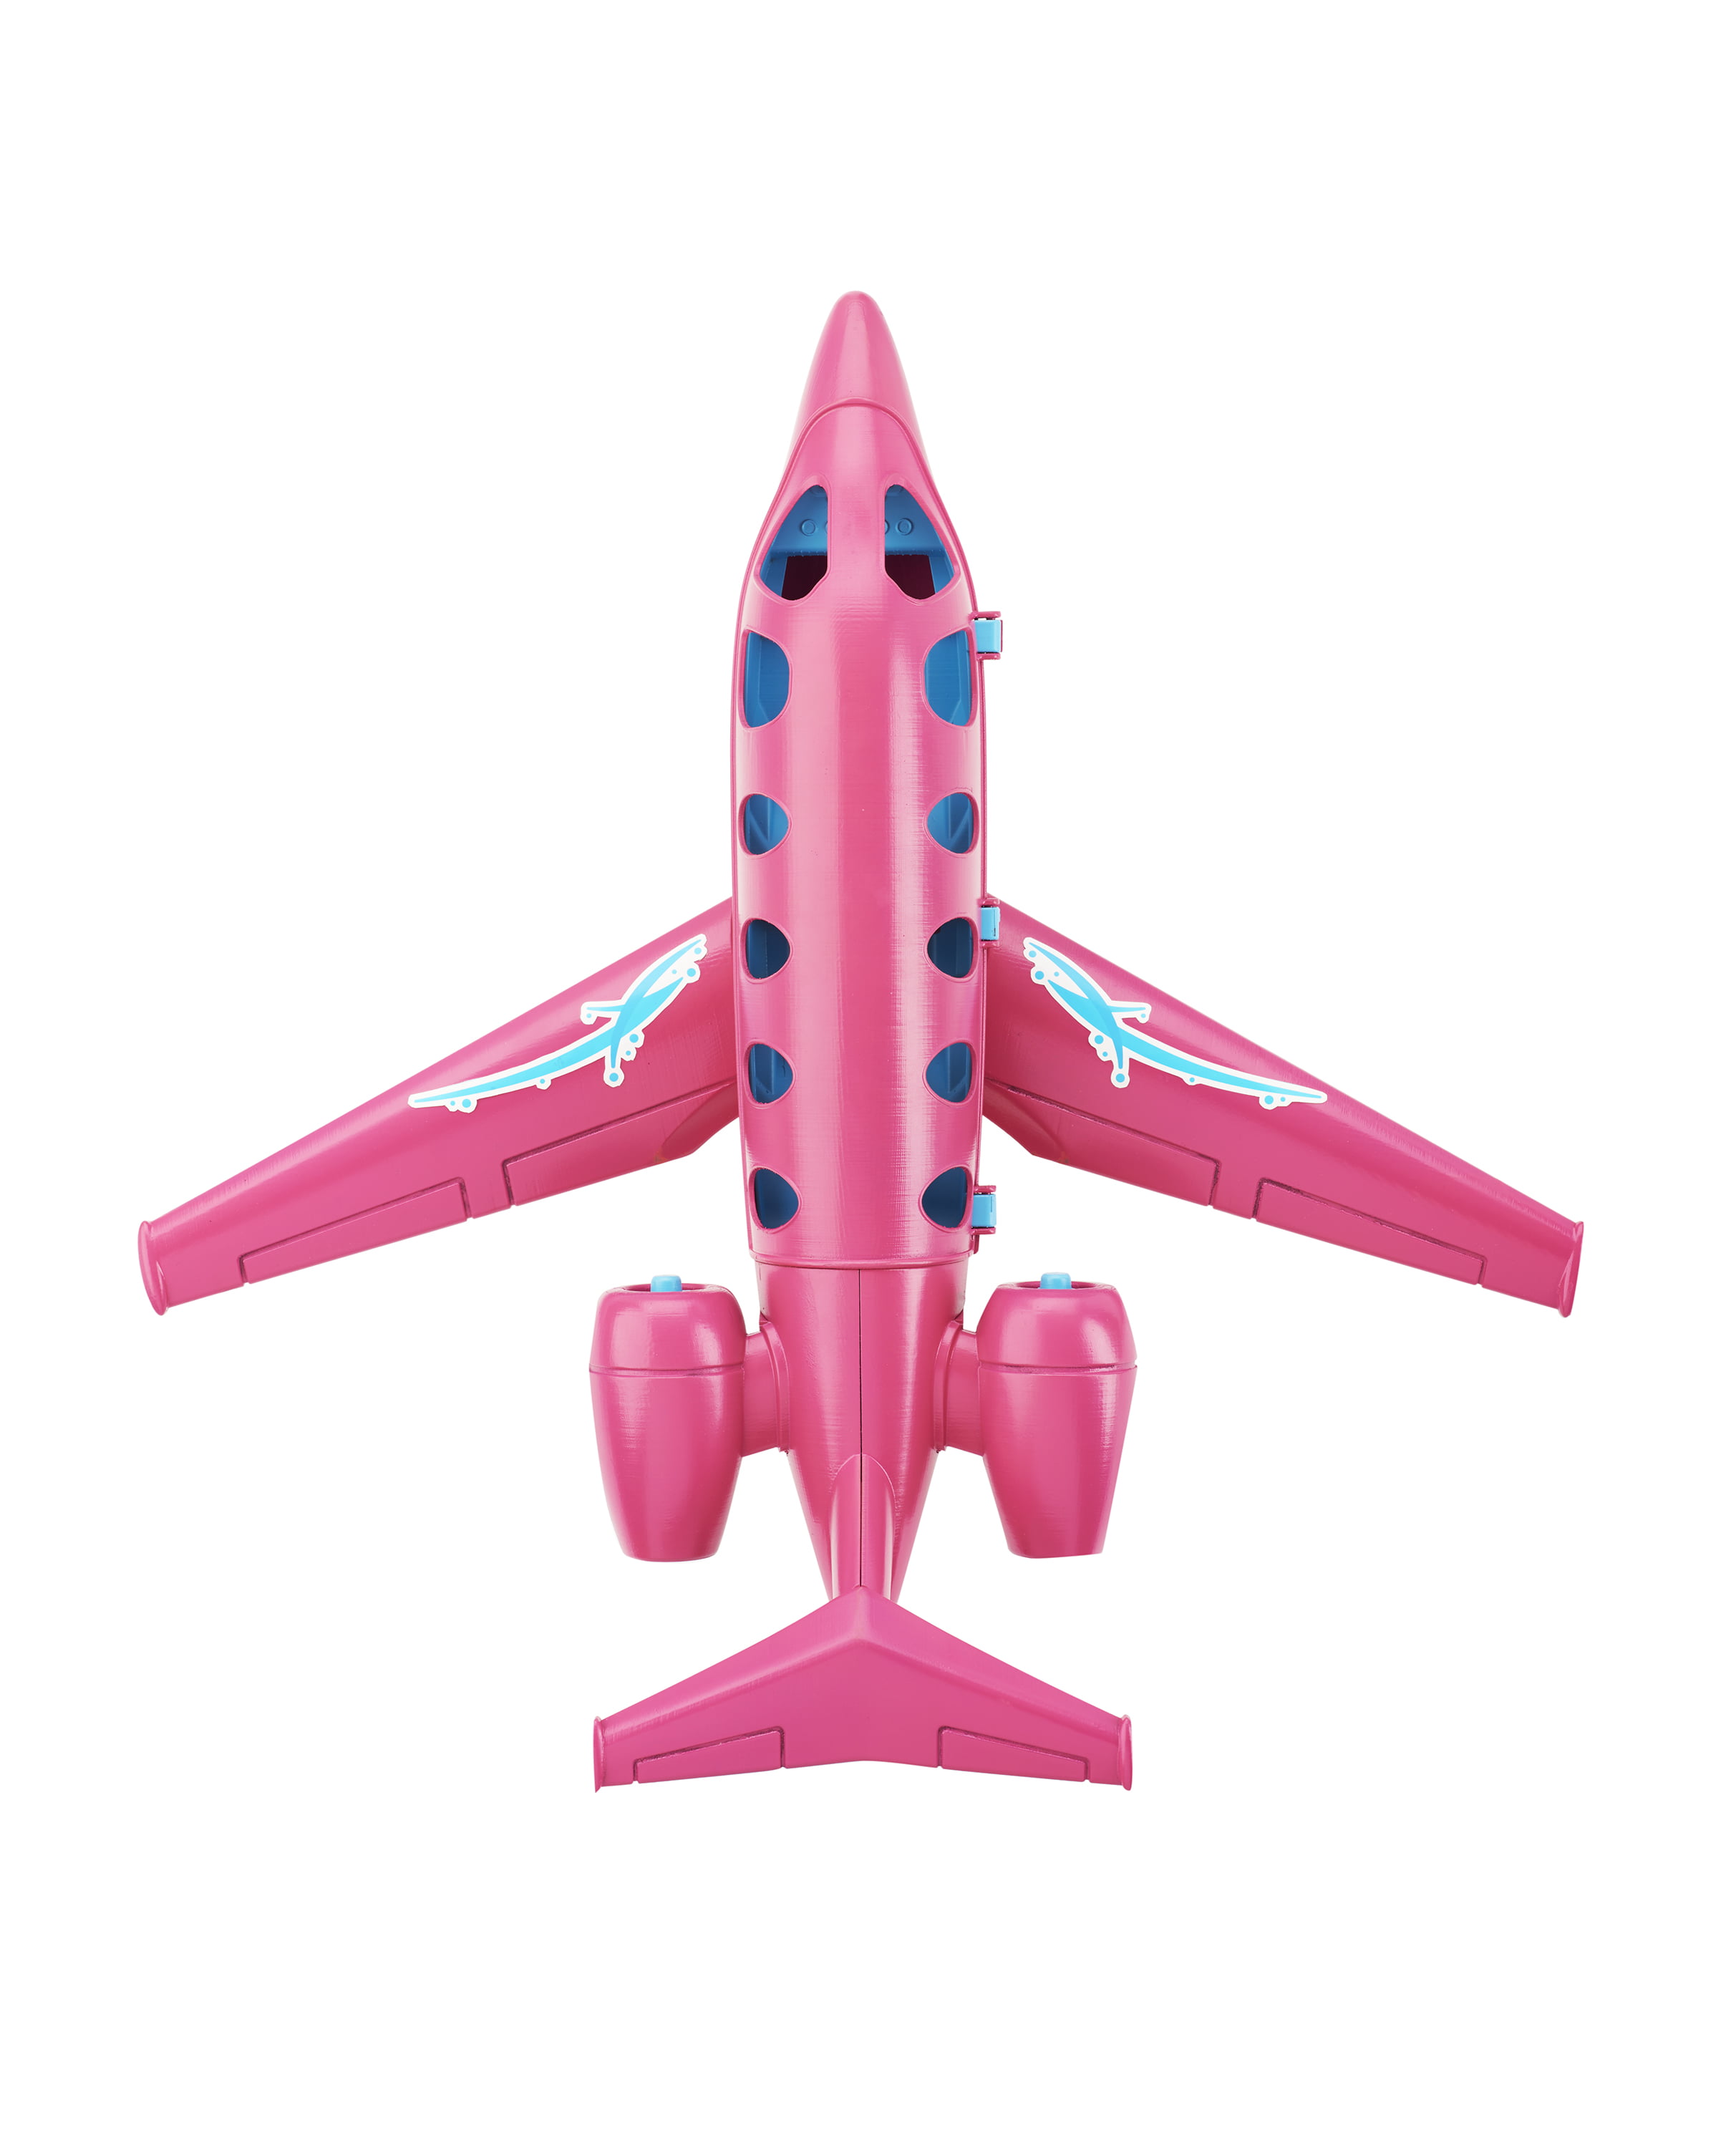 Luxury Jet, Airplane & Accessories for 6-inch Dolls